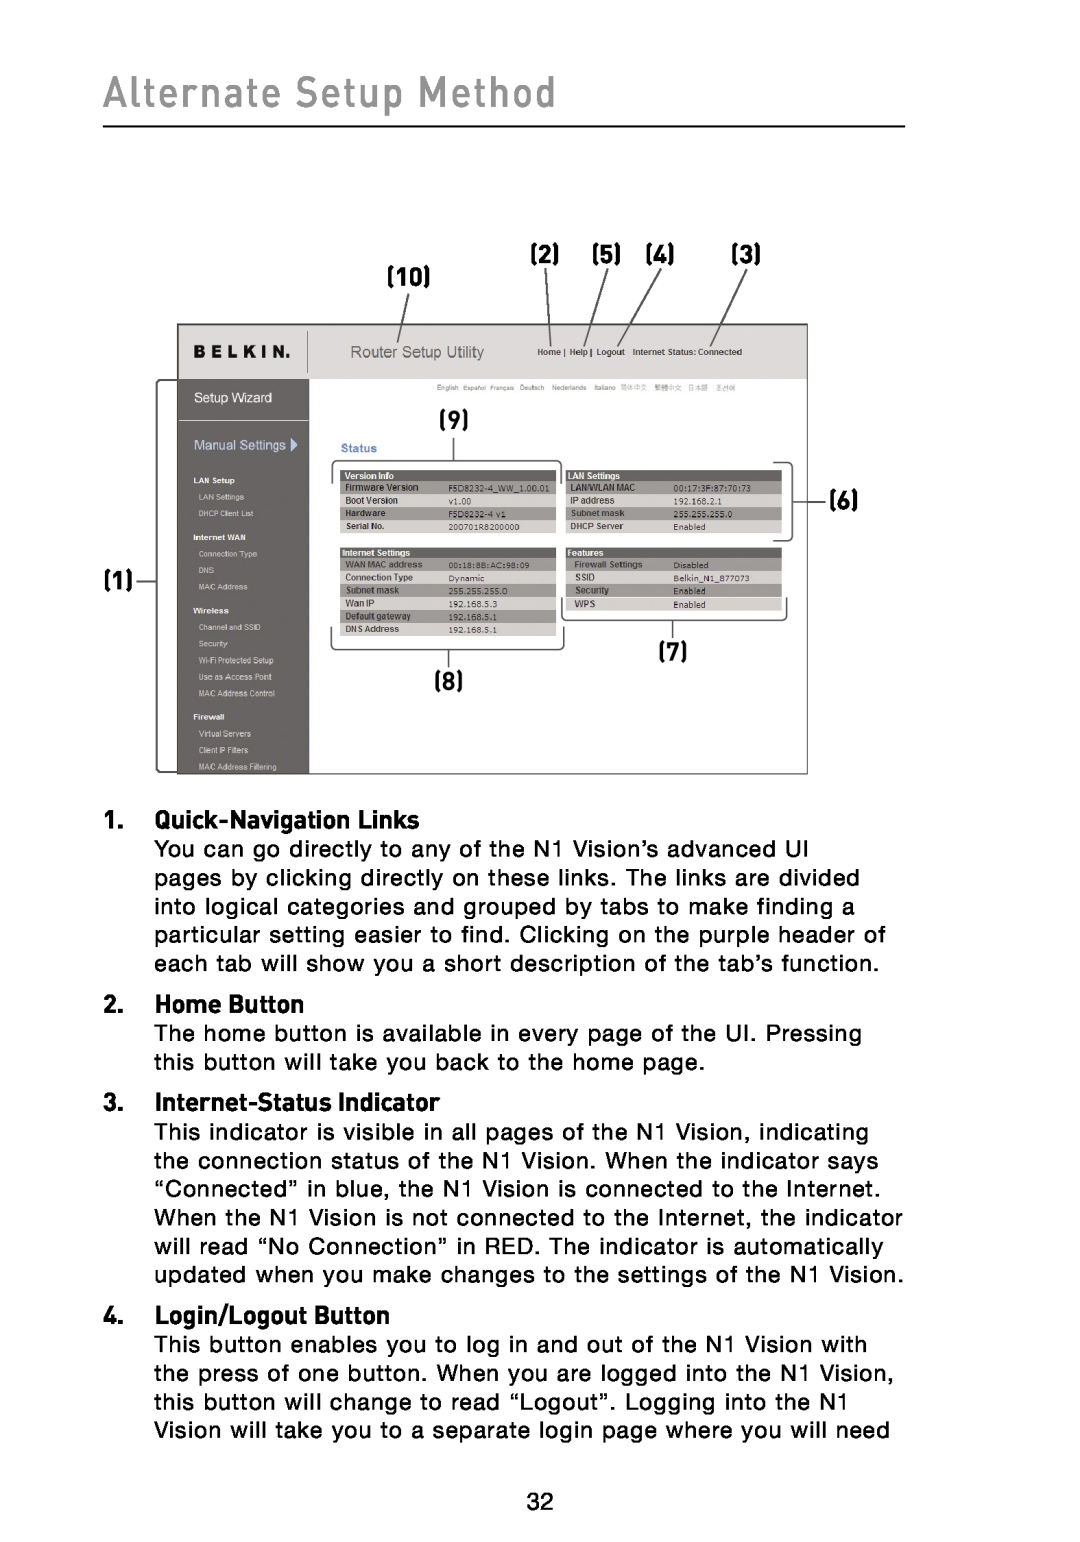 Belkin N1 Alternate Setup Method, Quick-Navigation Links, Home Button, Internet-Status Indicator, Login/Logout Button 